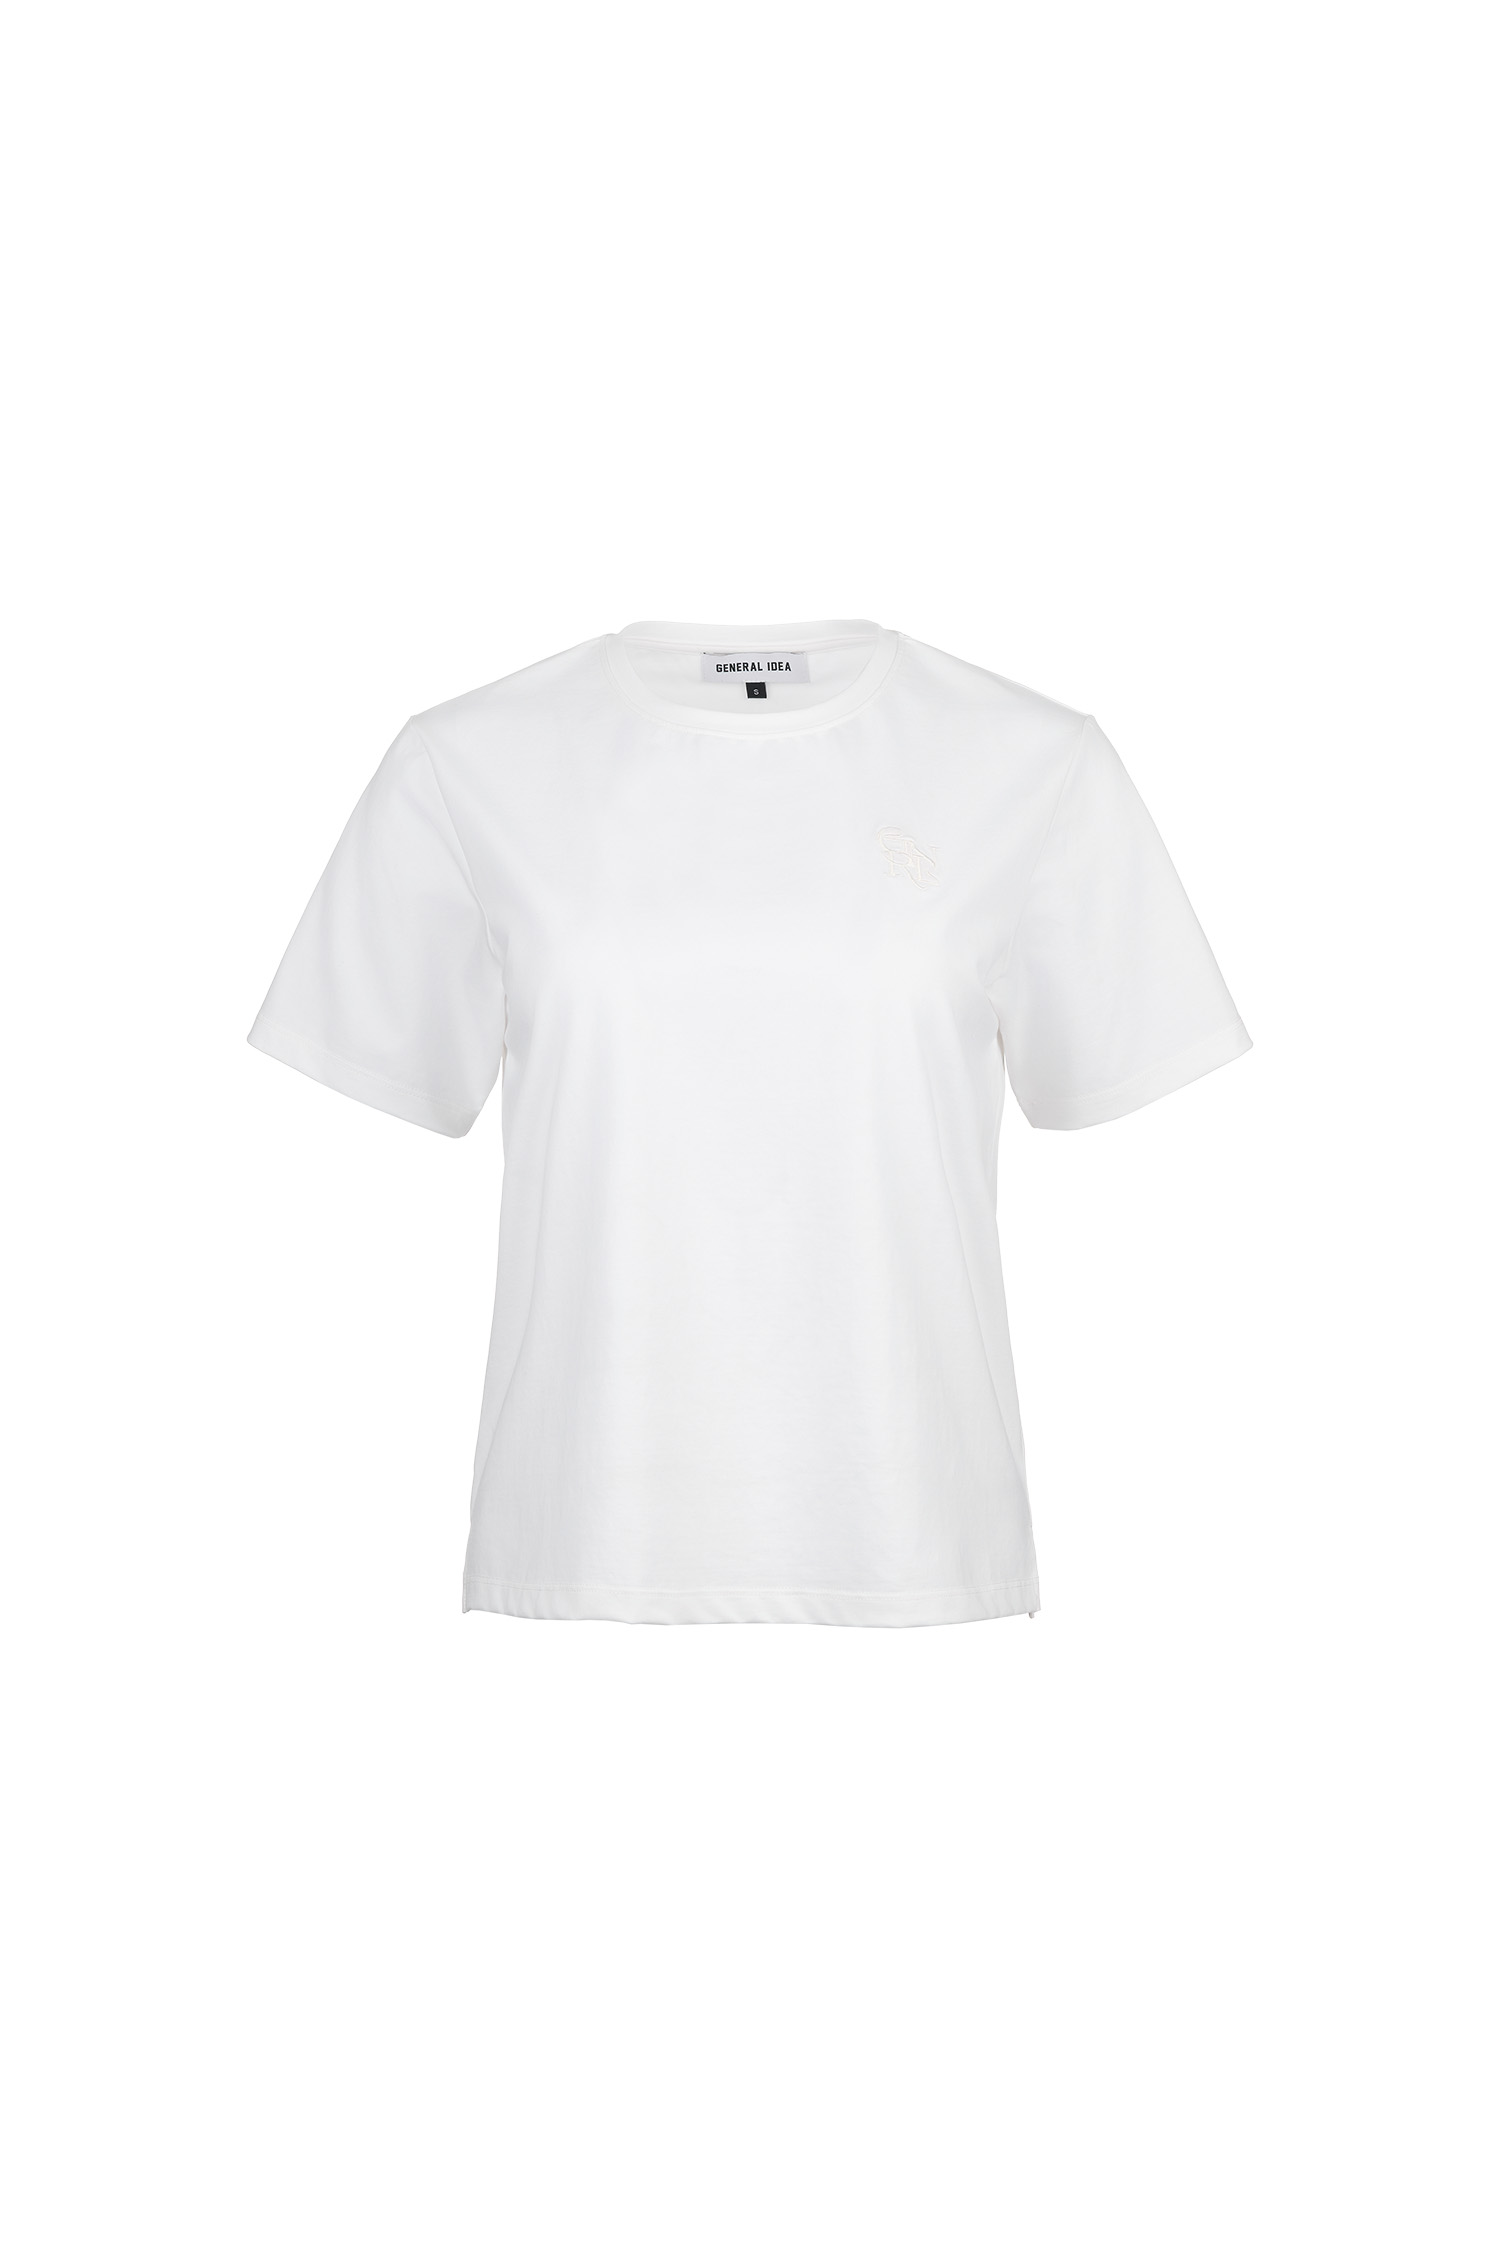 WOMAN GNRL 실켓 스판 티셔츠 [WHITE]